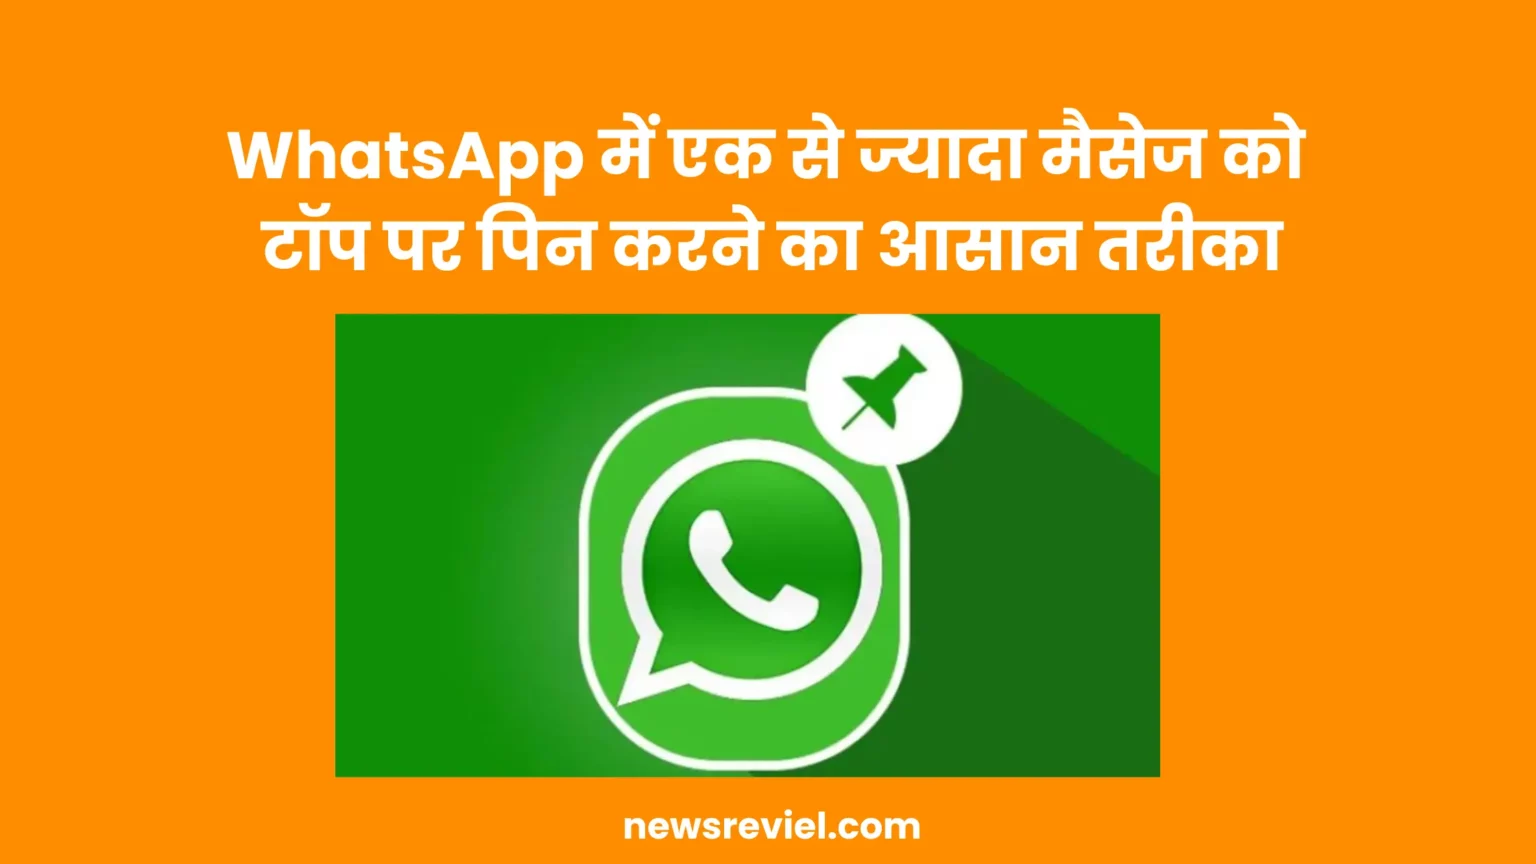 WhatsApp mein ek se zyada message ko top par pin karne ka aasan tarika